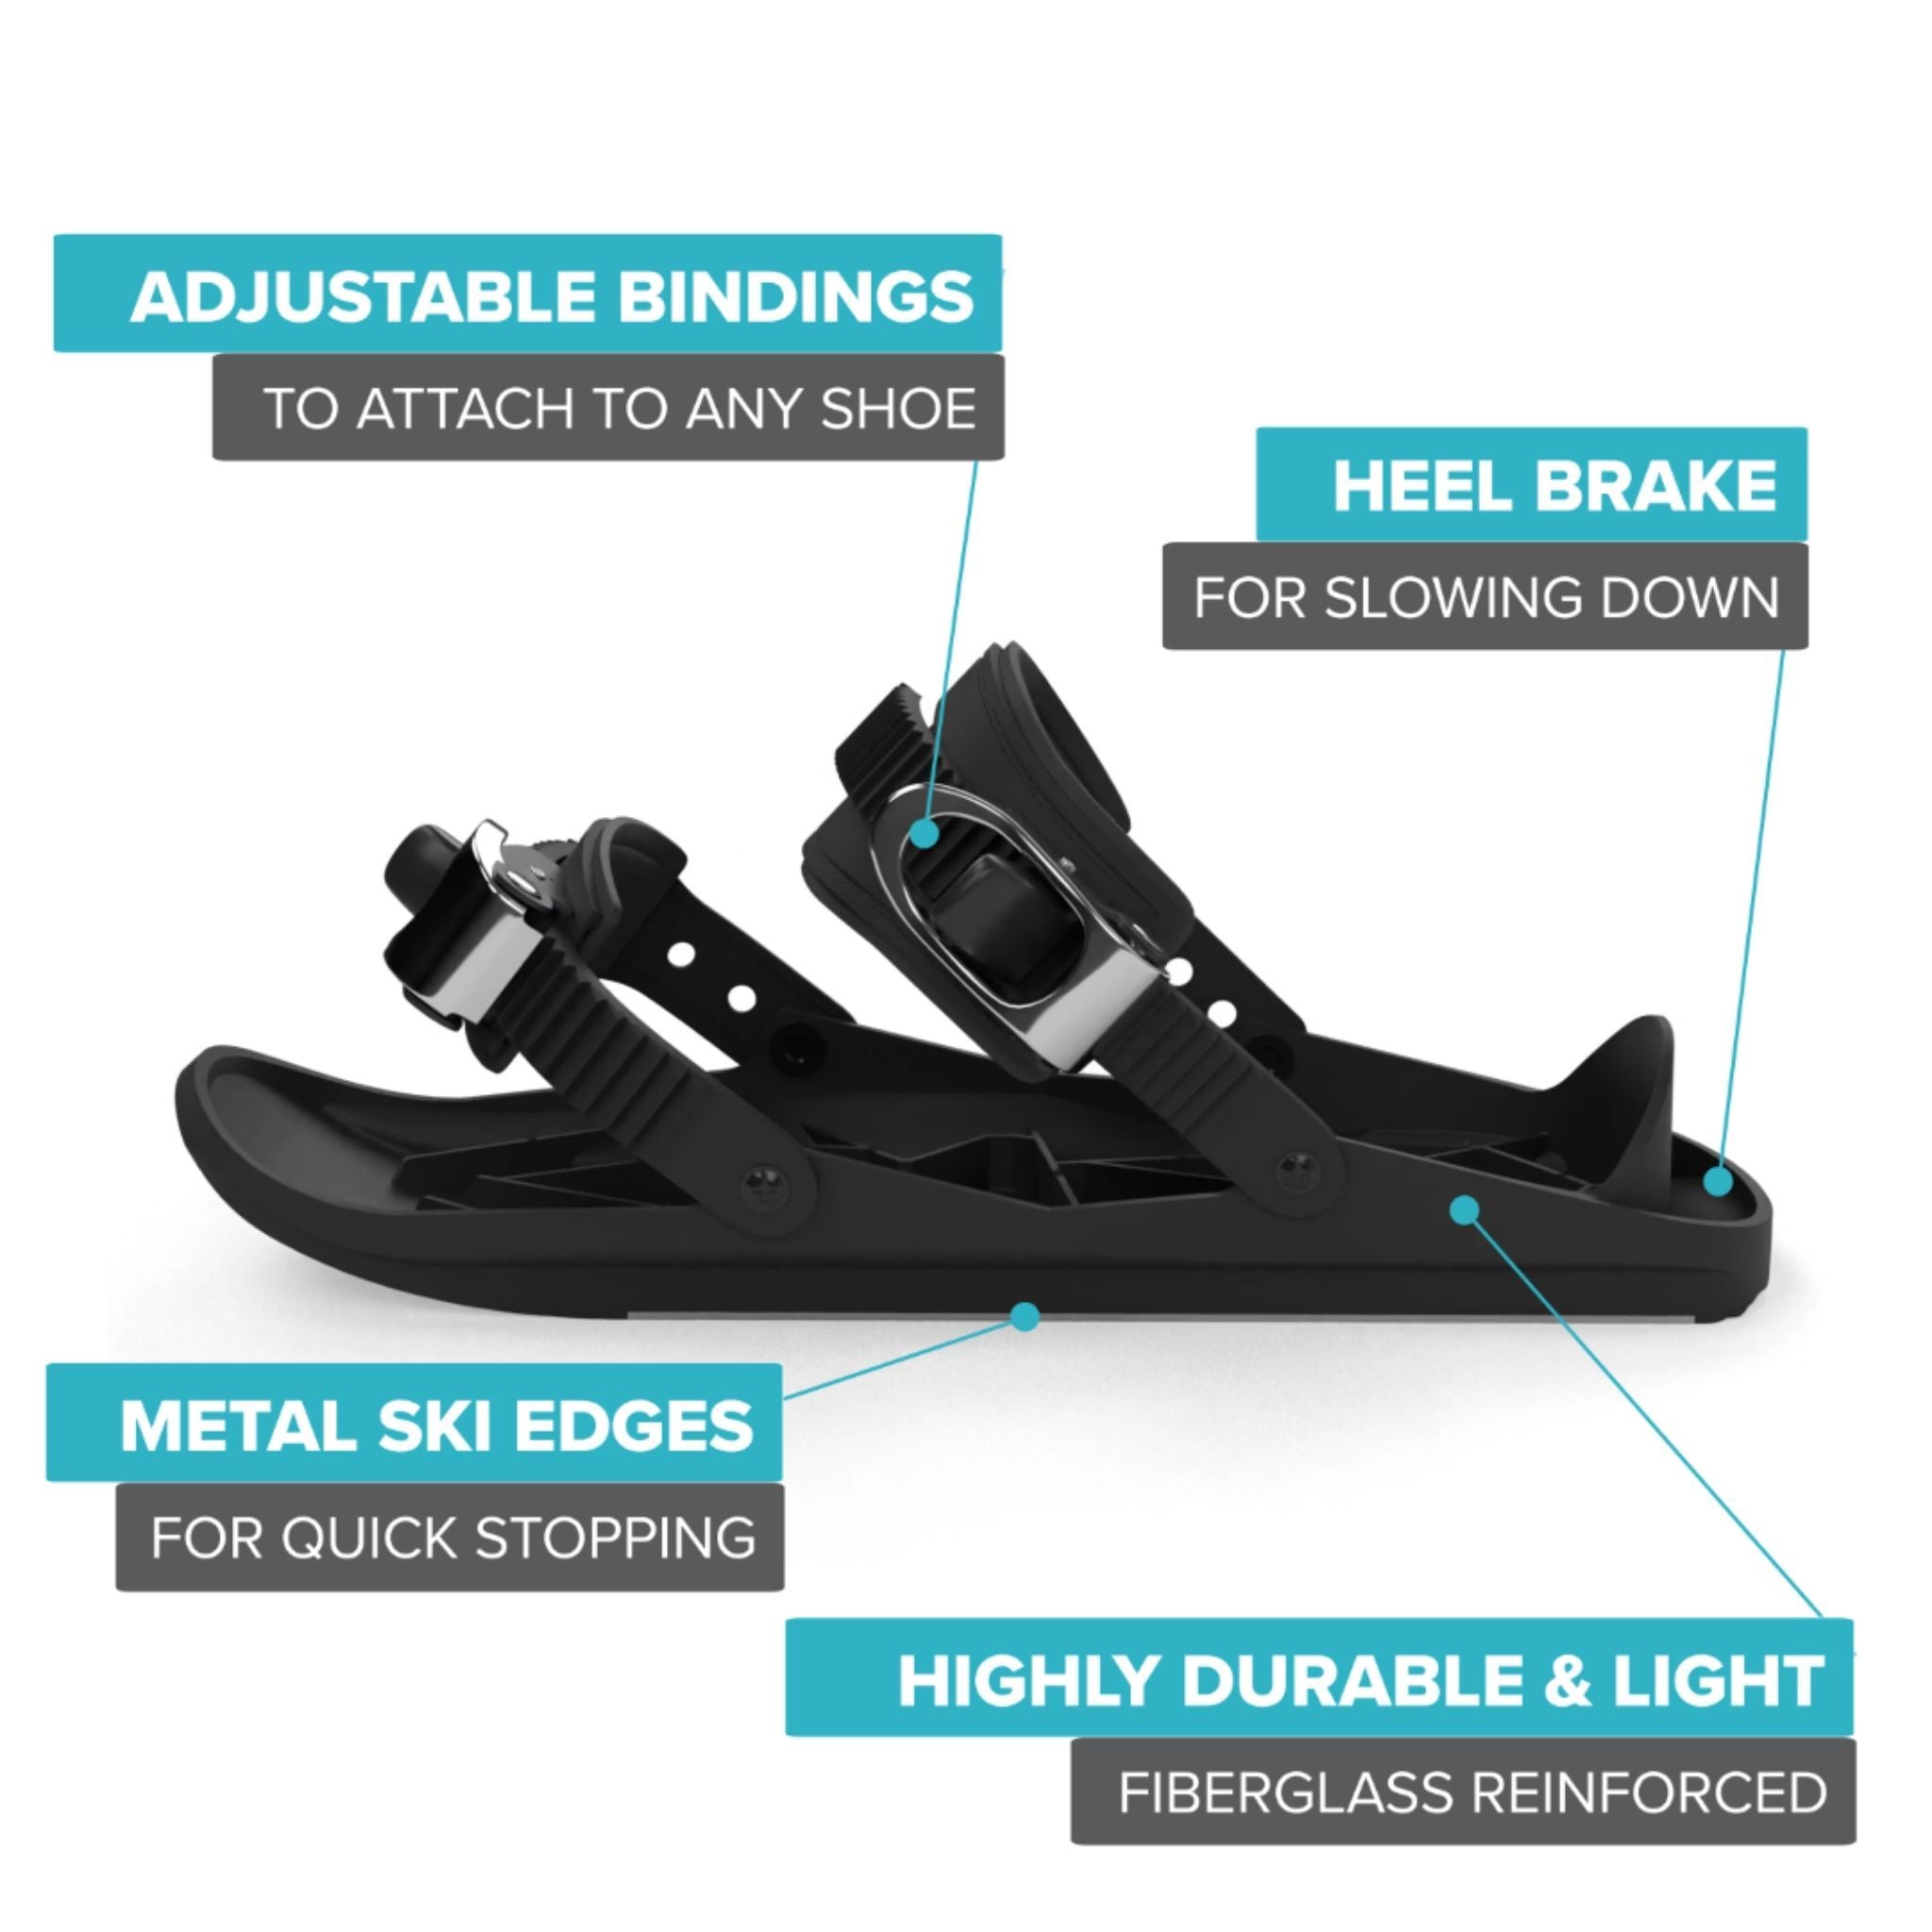 Snowfeet - Mini skis, Adjustable bindings, heel brake, metal ski edges, fiberglass reinforced